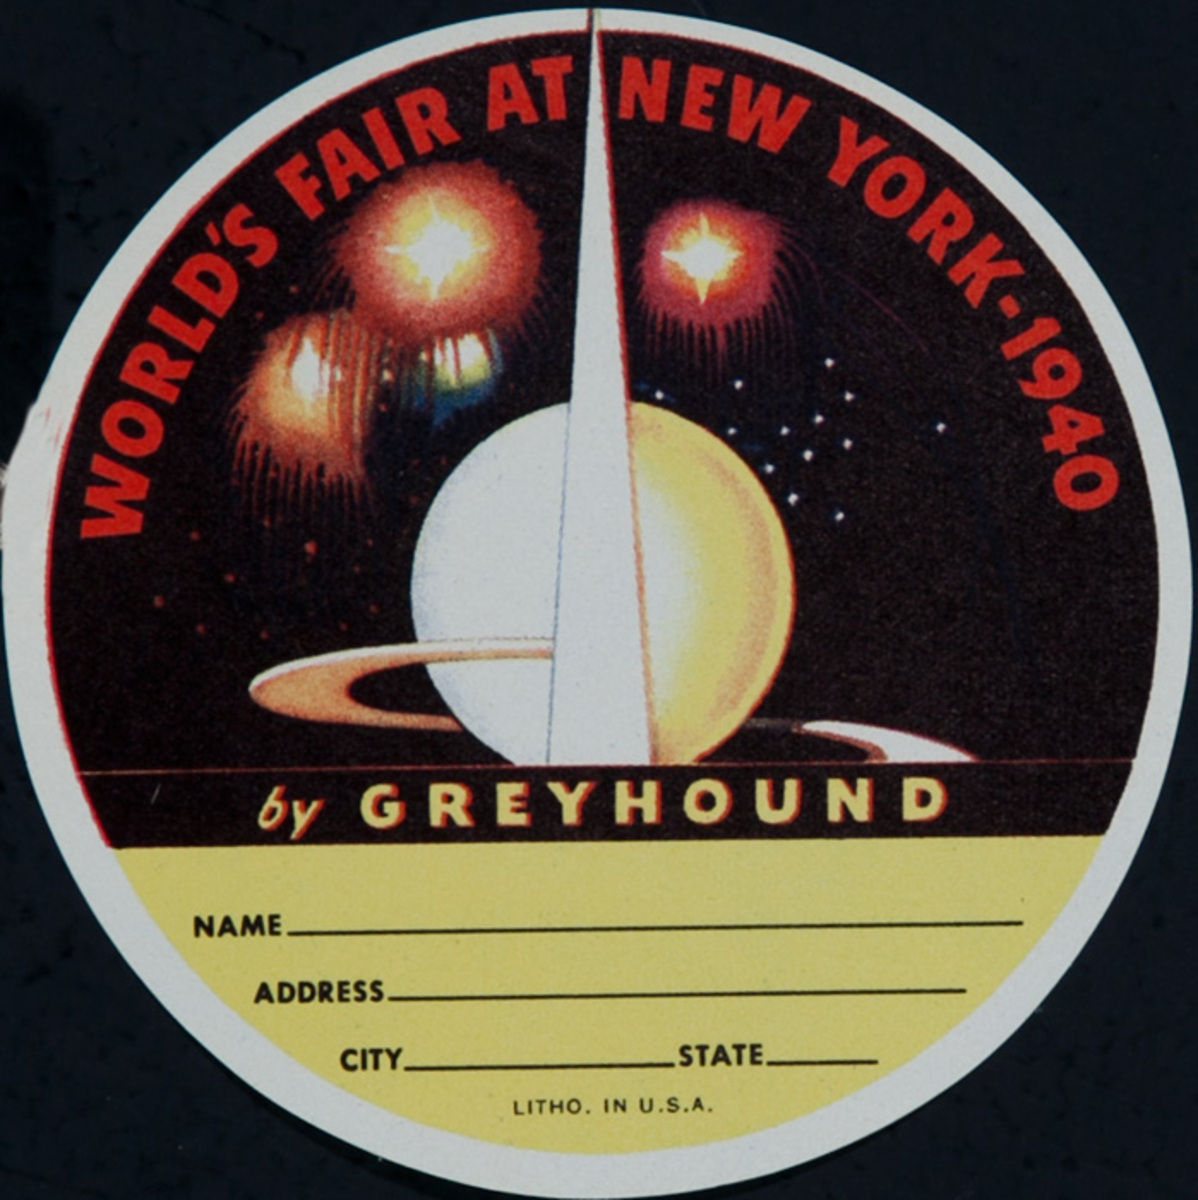 World's Fair AT New York by Greyhound Original Luggage Label round